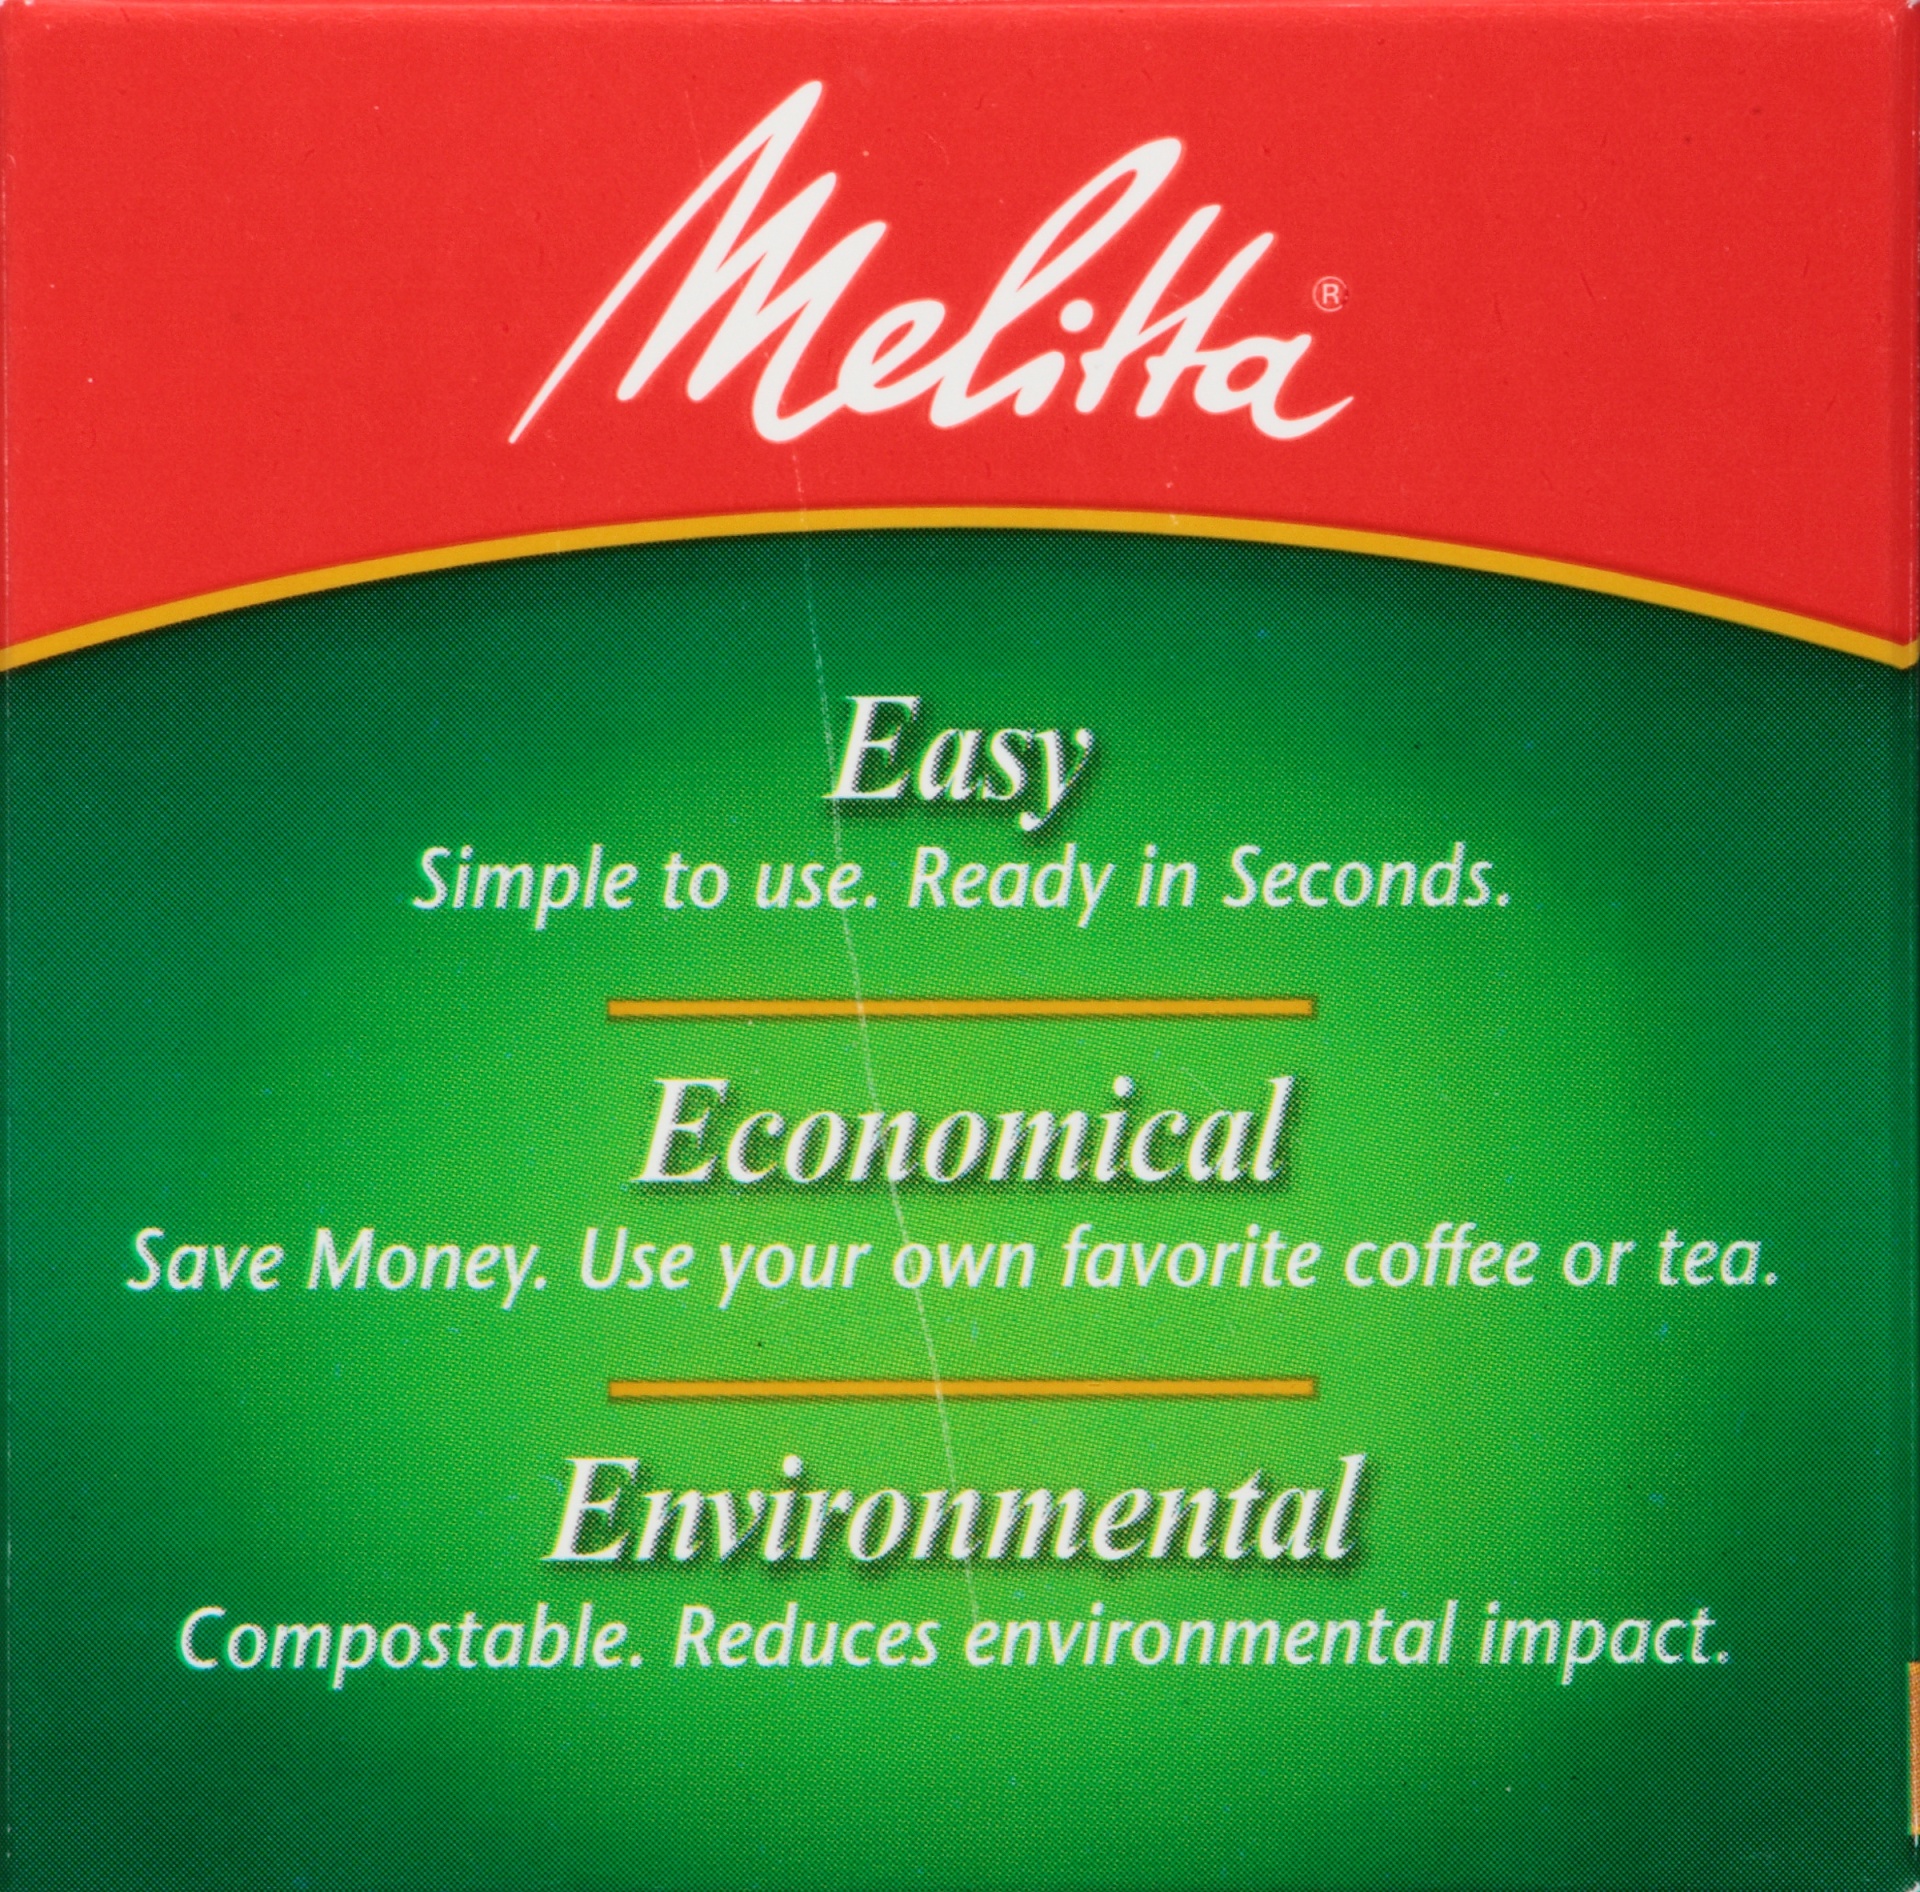 Save on Melitta JavaJig Reusable Coffee Filter System BPA Free Order Online  Delivery